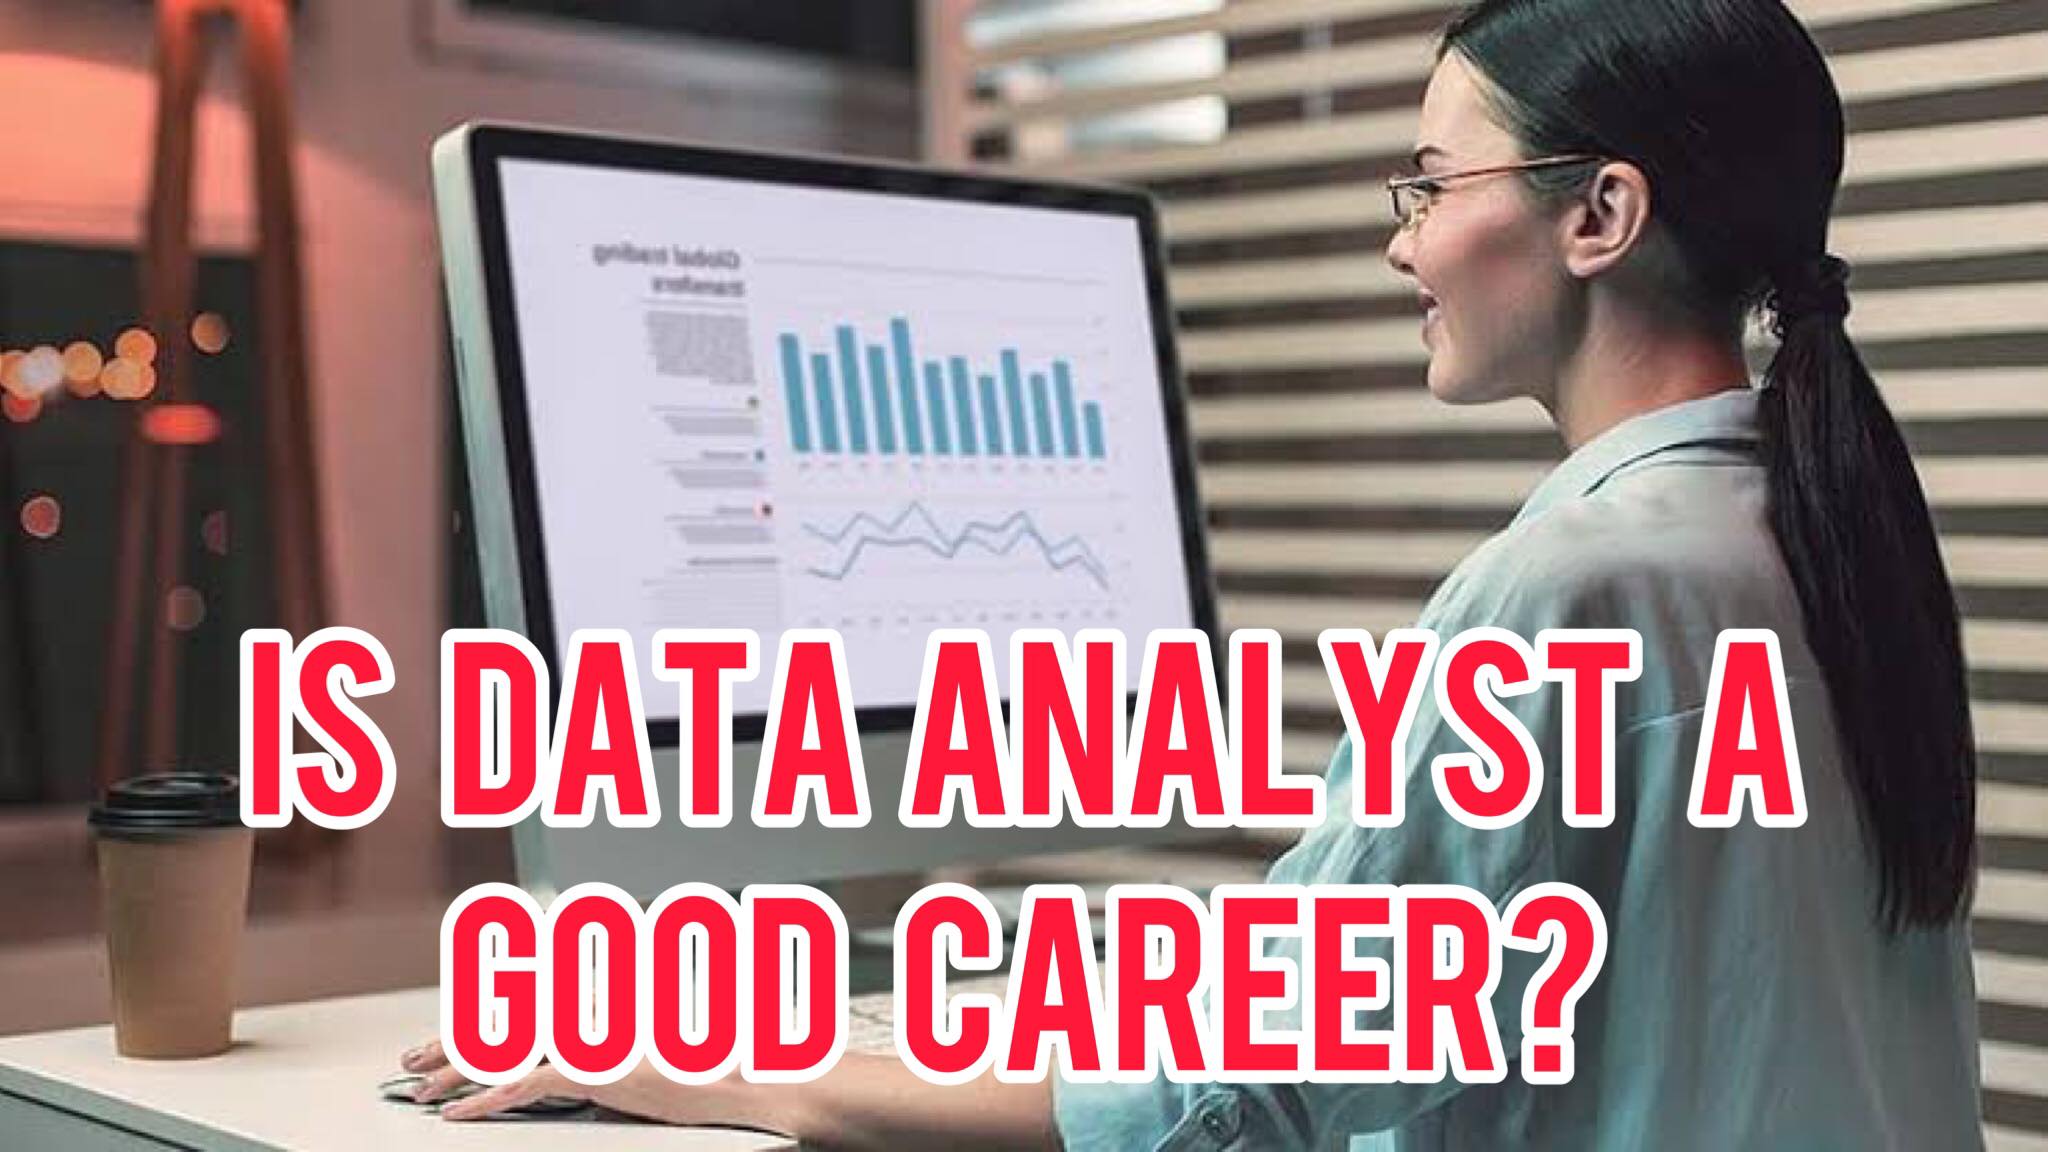 Is Data Analyst a Good Career